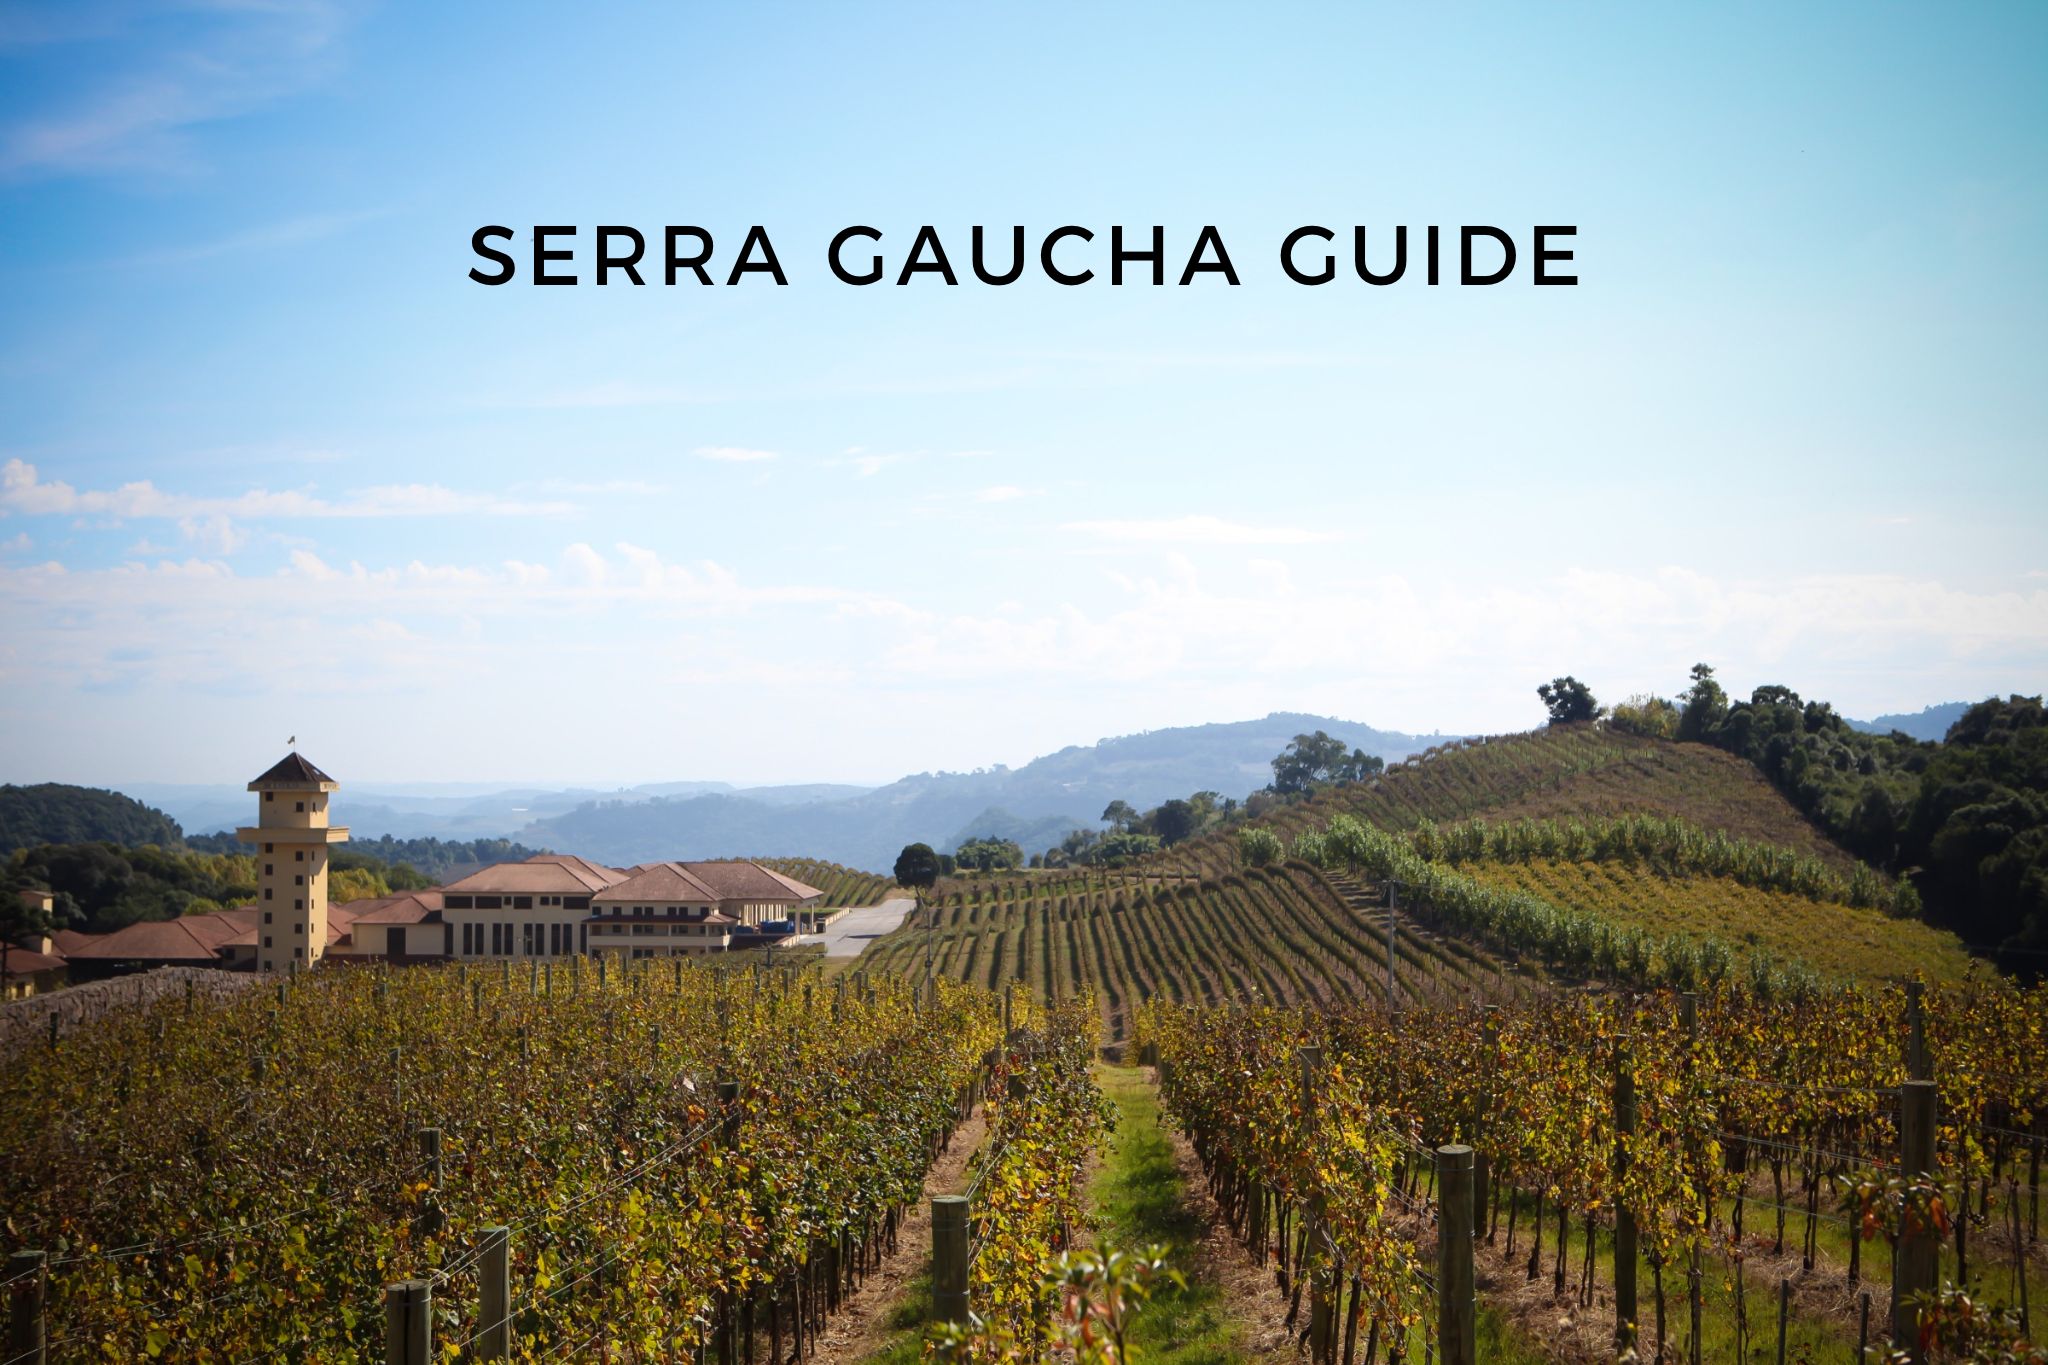 Serra gaucha wine region in Brazil